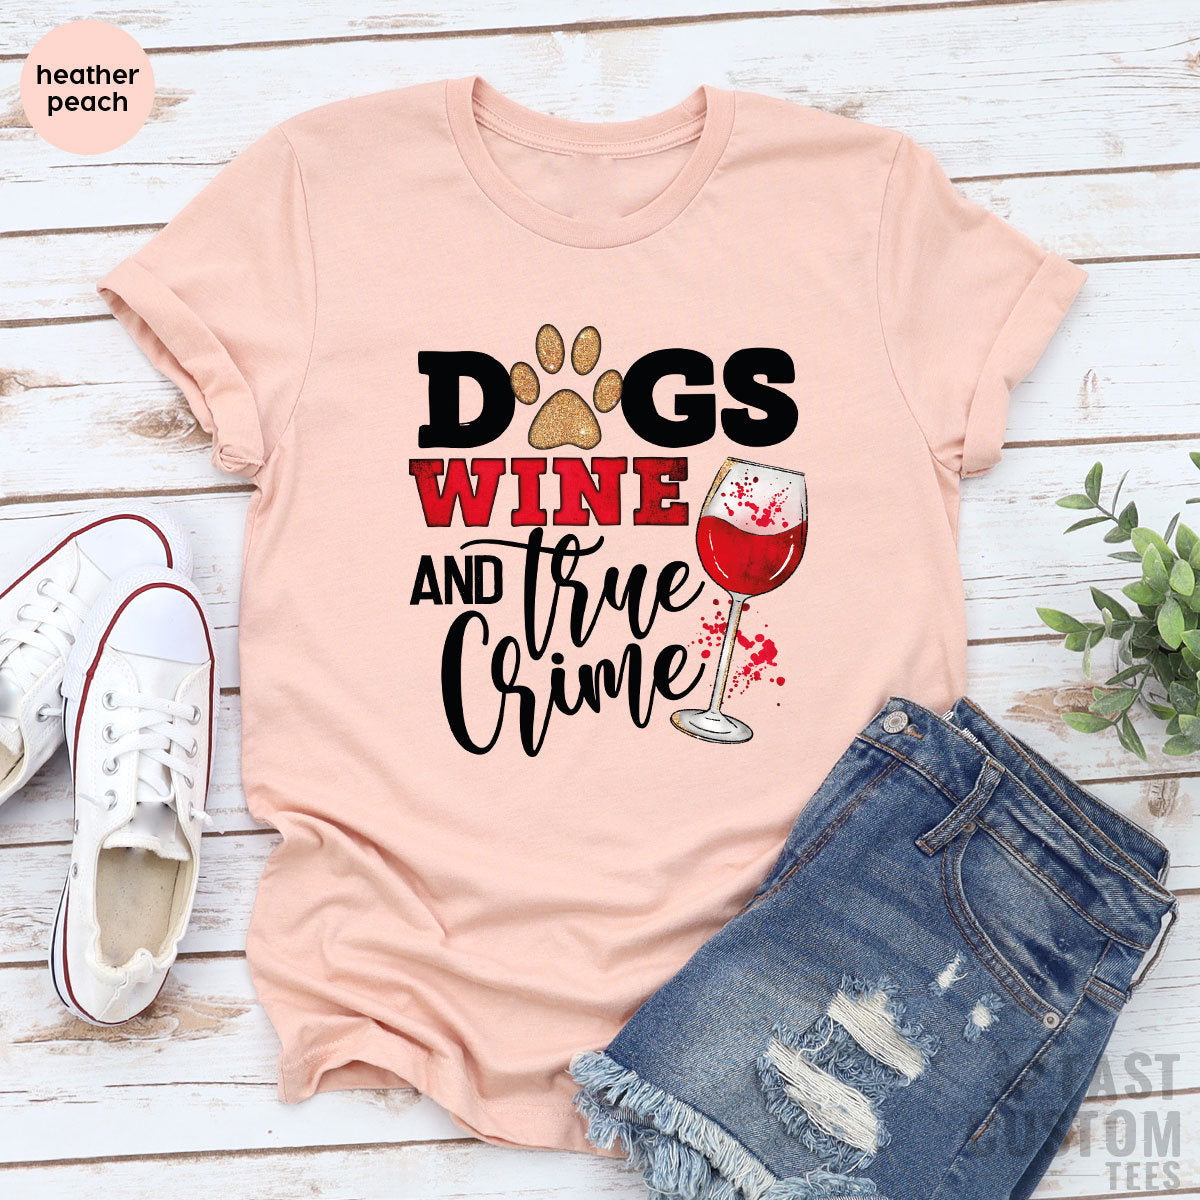 Dogs Wine And True Crime Shirt, Funny Dog Lover Shirt, Dog Owner T-Shirt, Gift For Dog Mom, Wine Lover TShirt, Sarcastic Shirt, Crime Tee - Fastdeliverytees.com